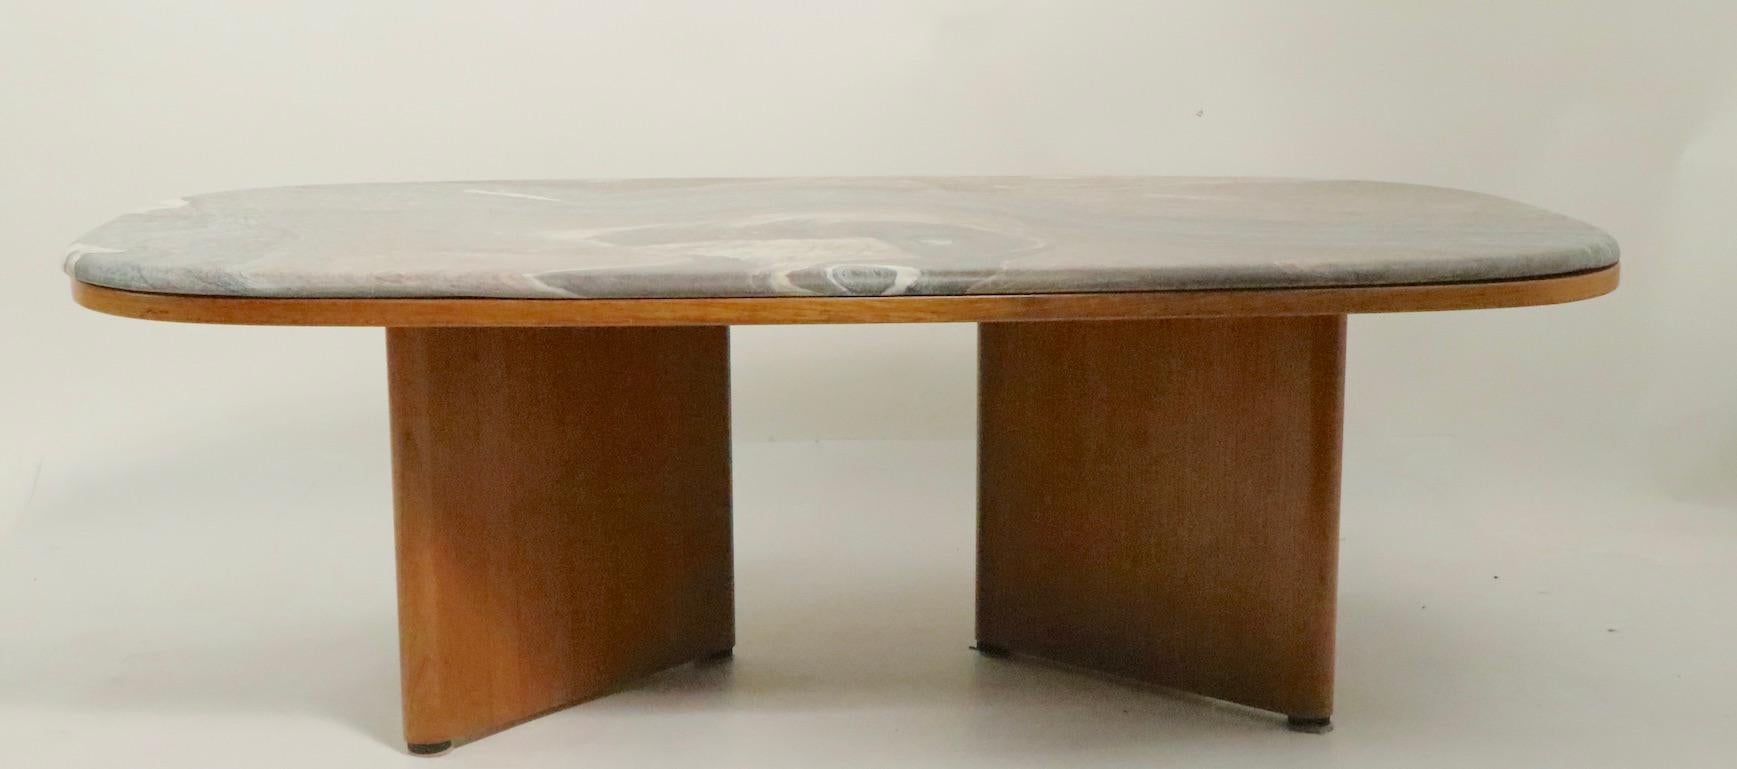 Scandinavian Modern Marble-Top Danish Modern Coffee Table by Bendixon Made in Sweden